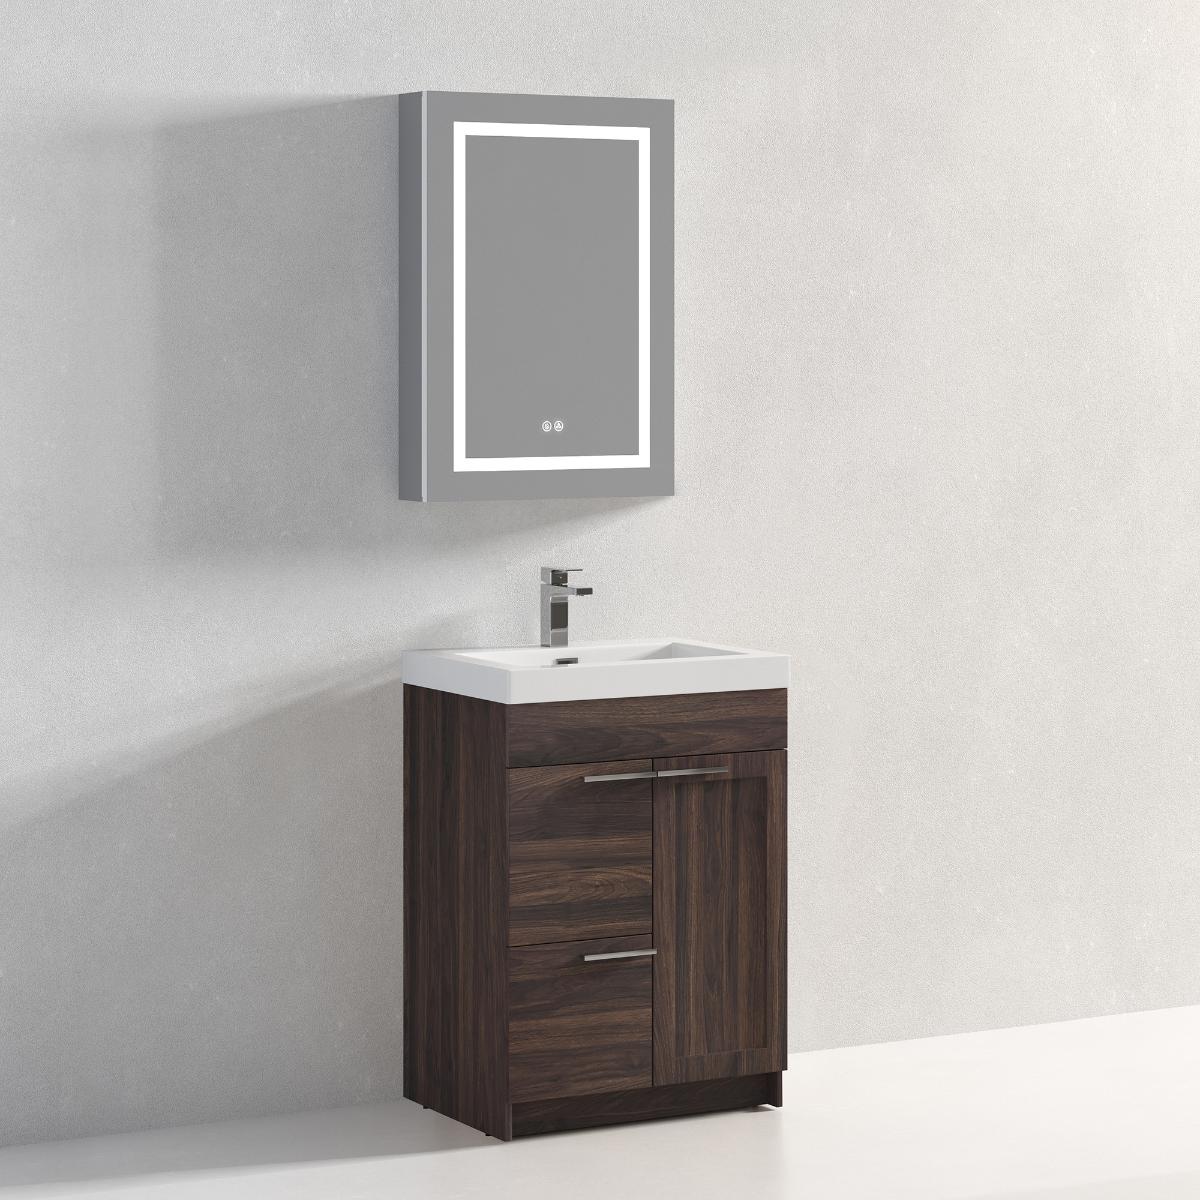 Hanover 24" Bathroom Vanity  #size_24"  #color_cali walnut